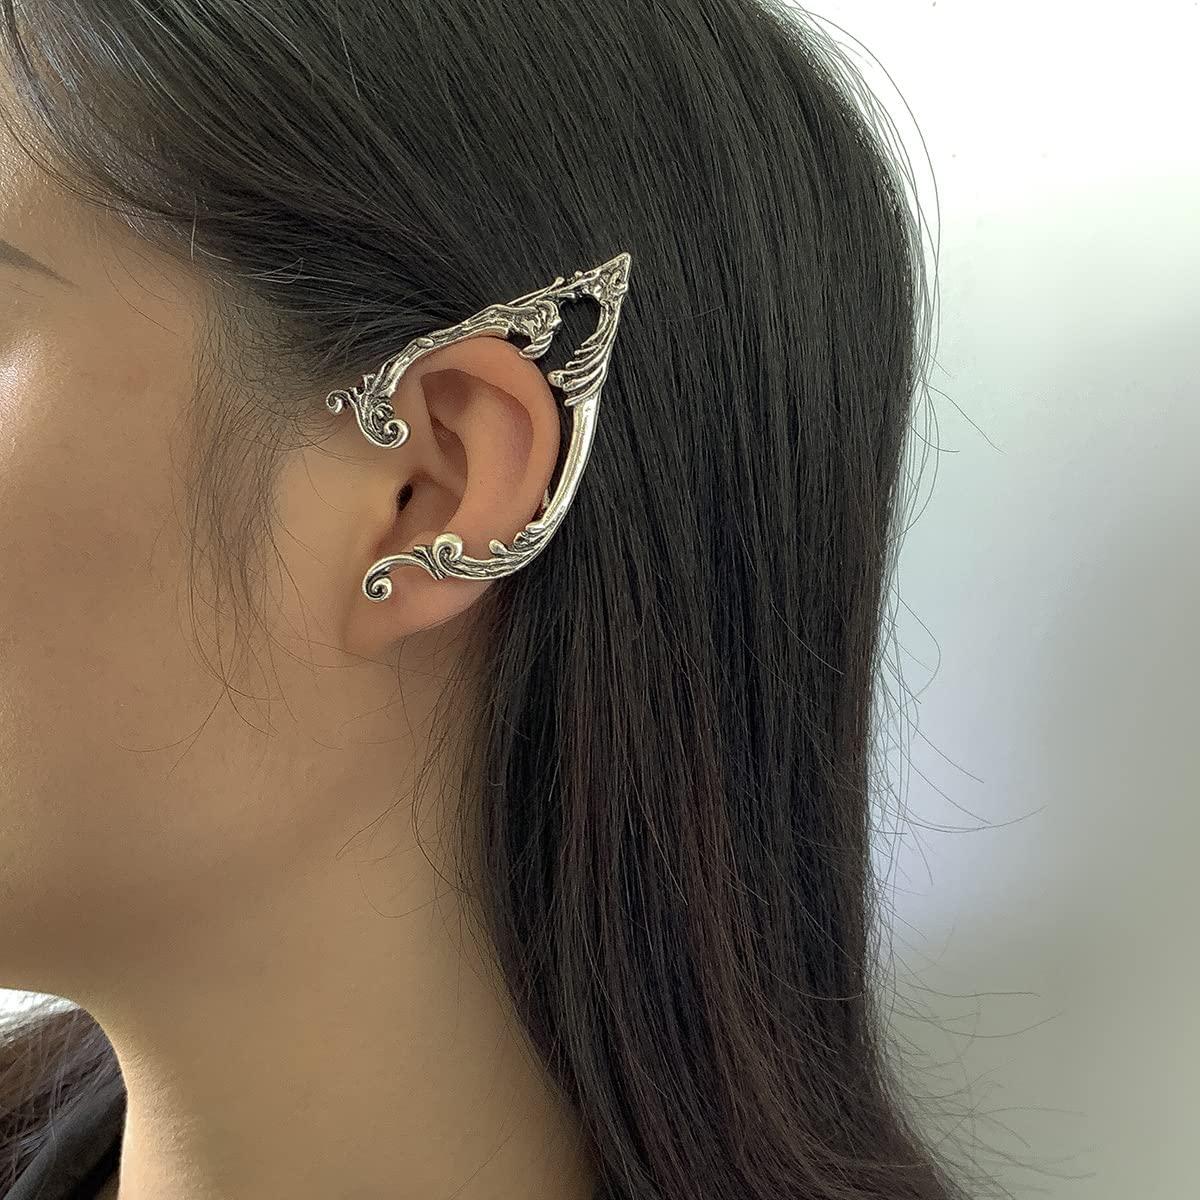 Fashion Crystal Clip Ear Cuff Stud Women's Men Punk Wrap Cartilage Earring  Gifts